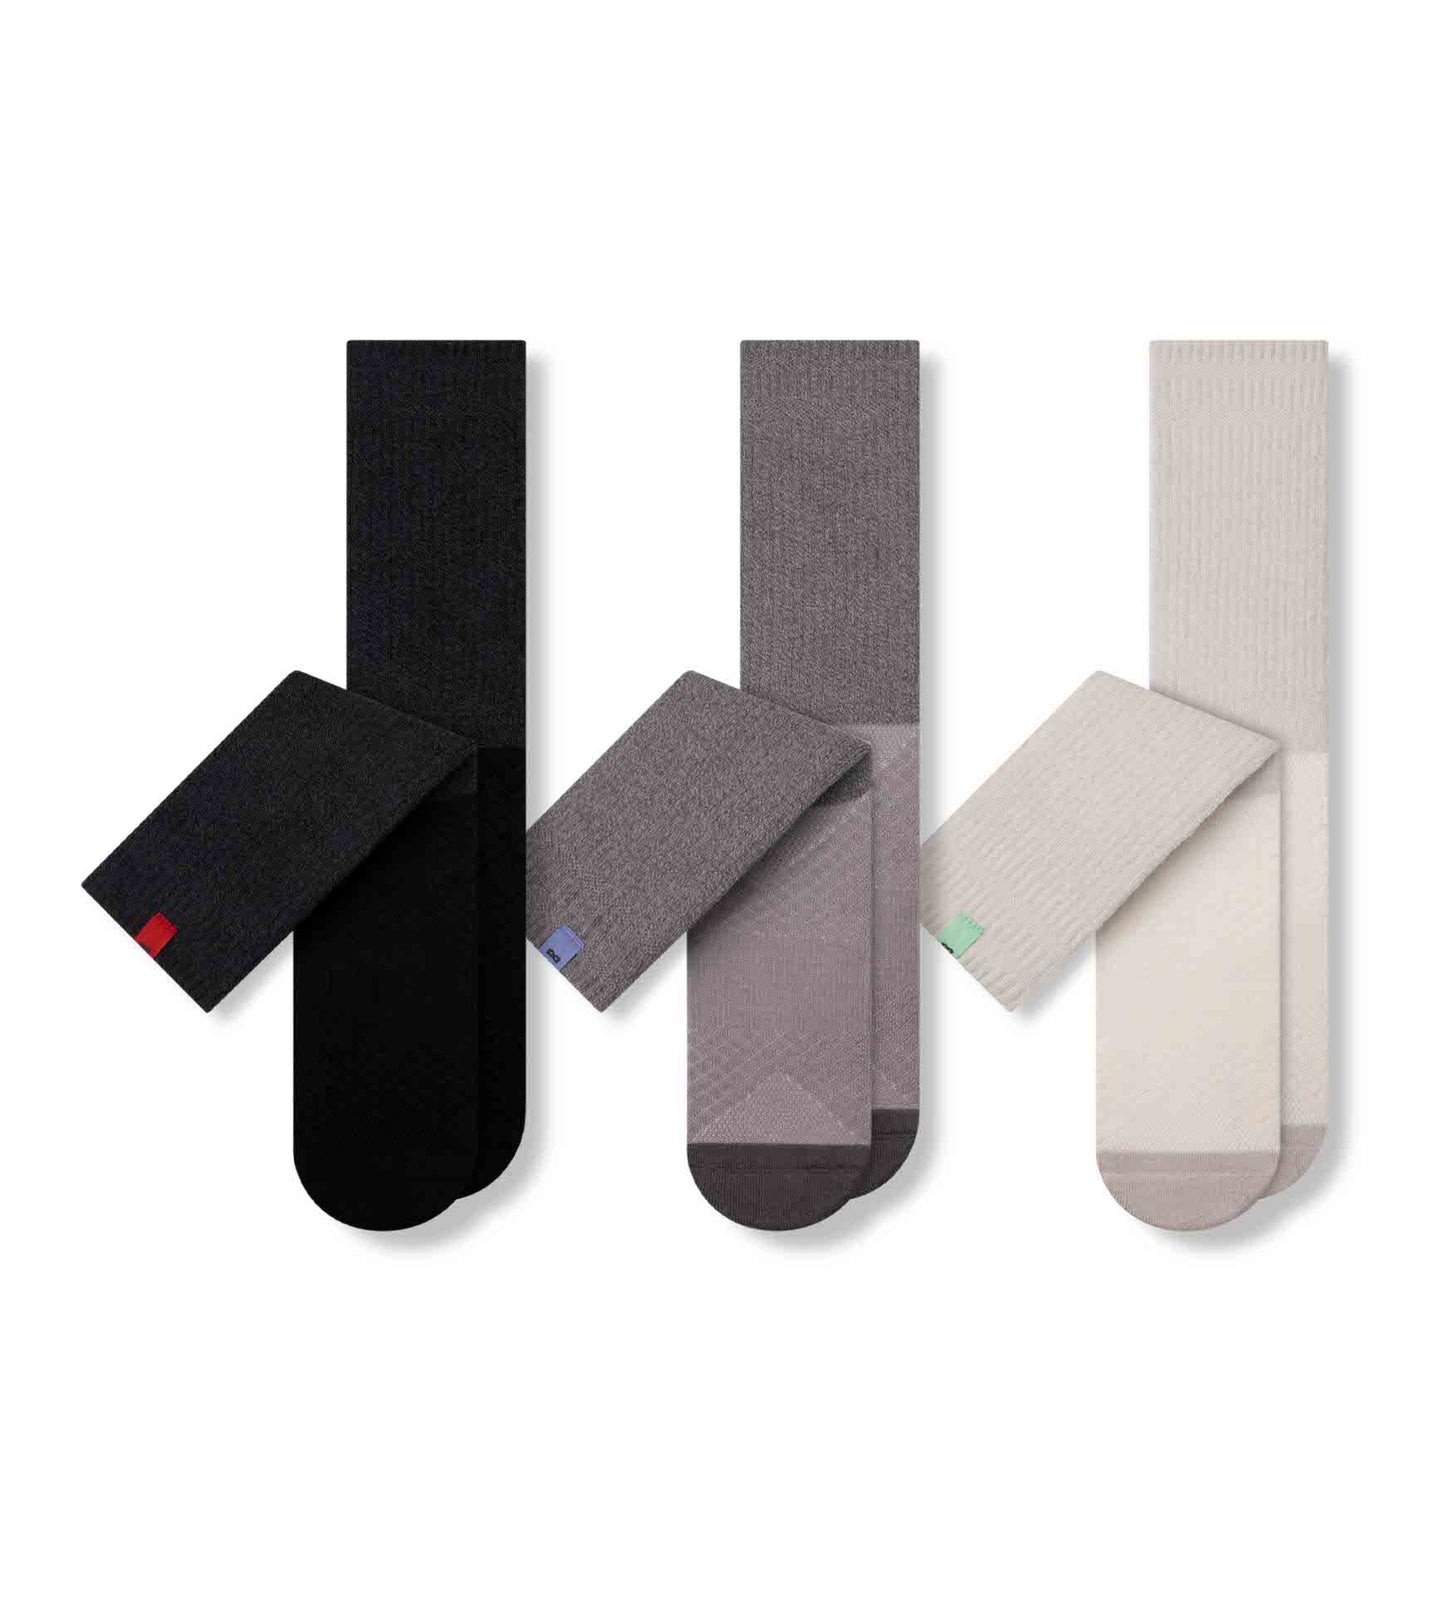 Hustle Cushion Crew Sock Bear Pack (12-pack) containing the colors Black, Dark Gray, Light Gray, Dim gray, Black, Dim gray, Dark slate gray, Silver, Gray